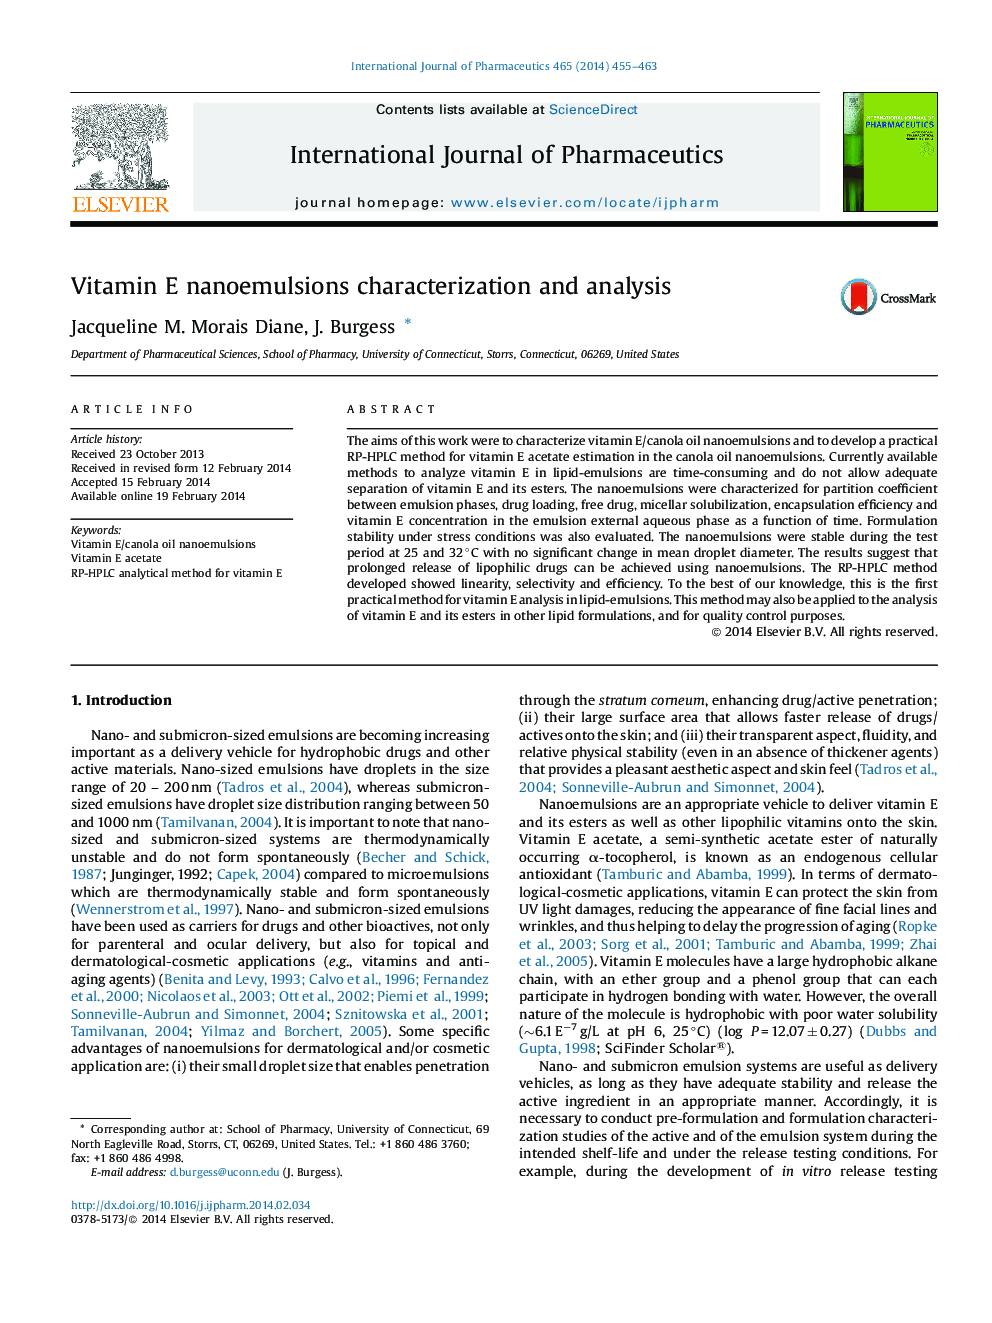 Vitamin E nanoemulsions characterization and analysis